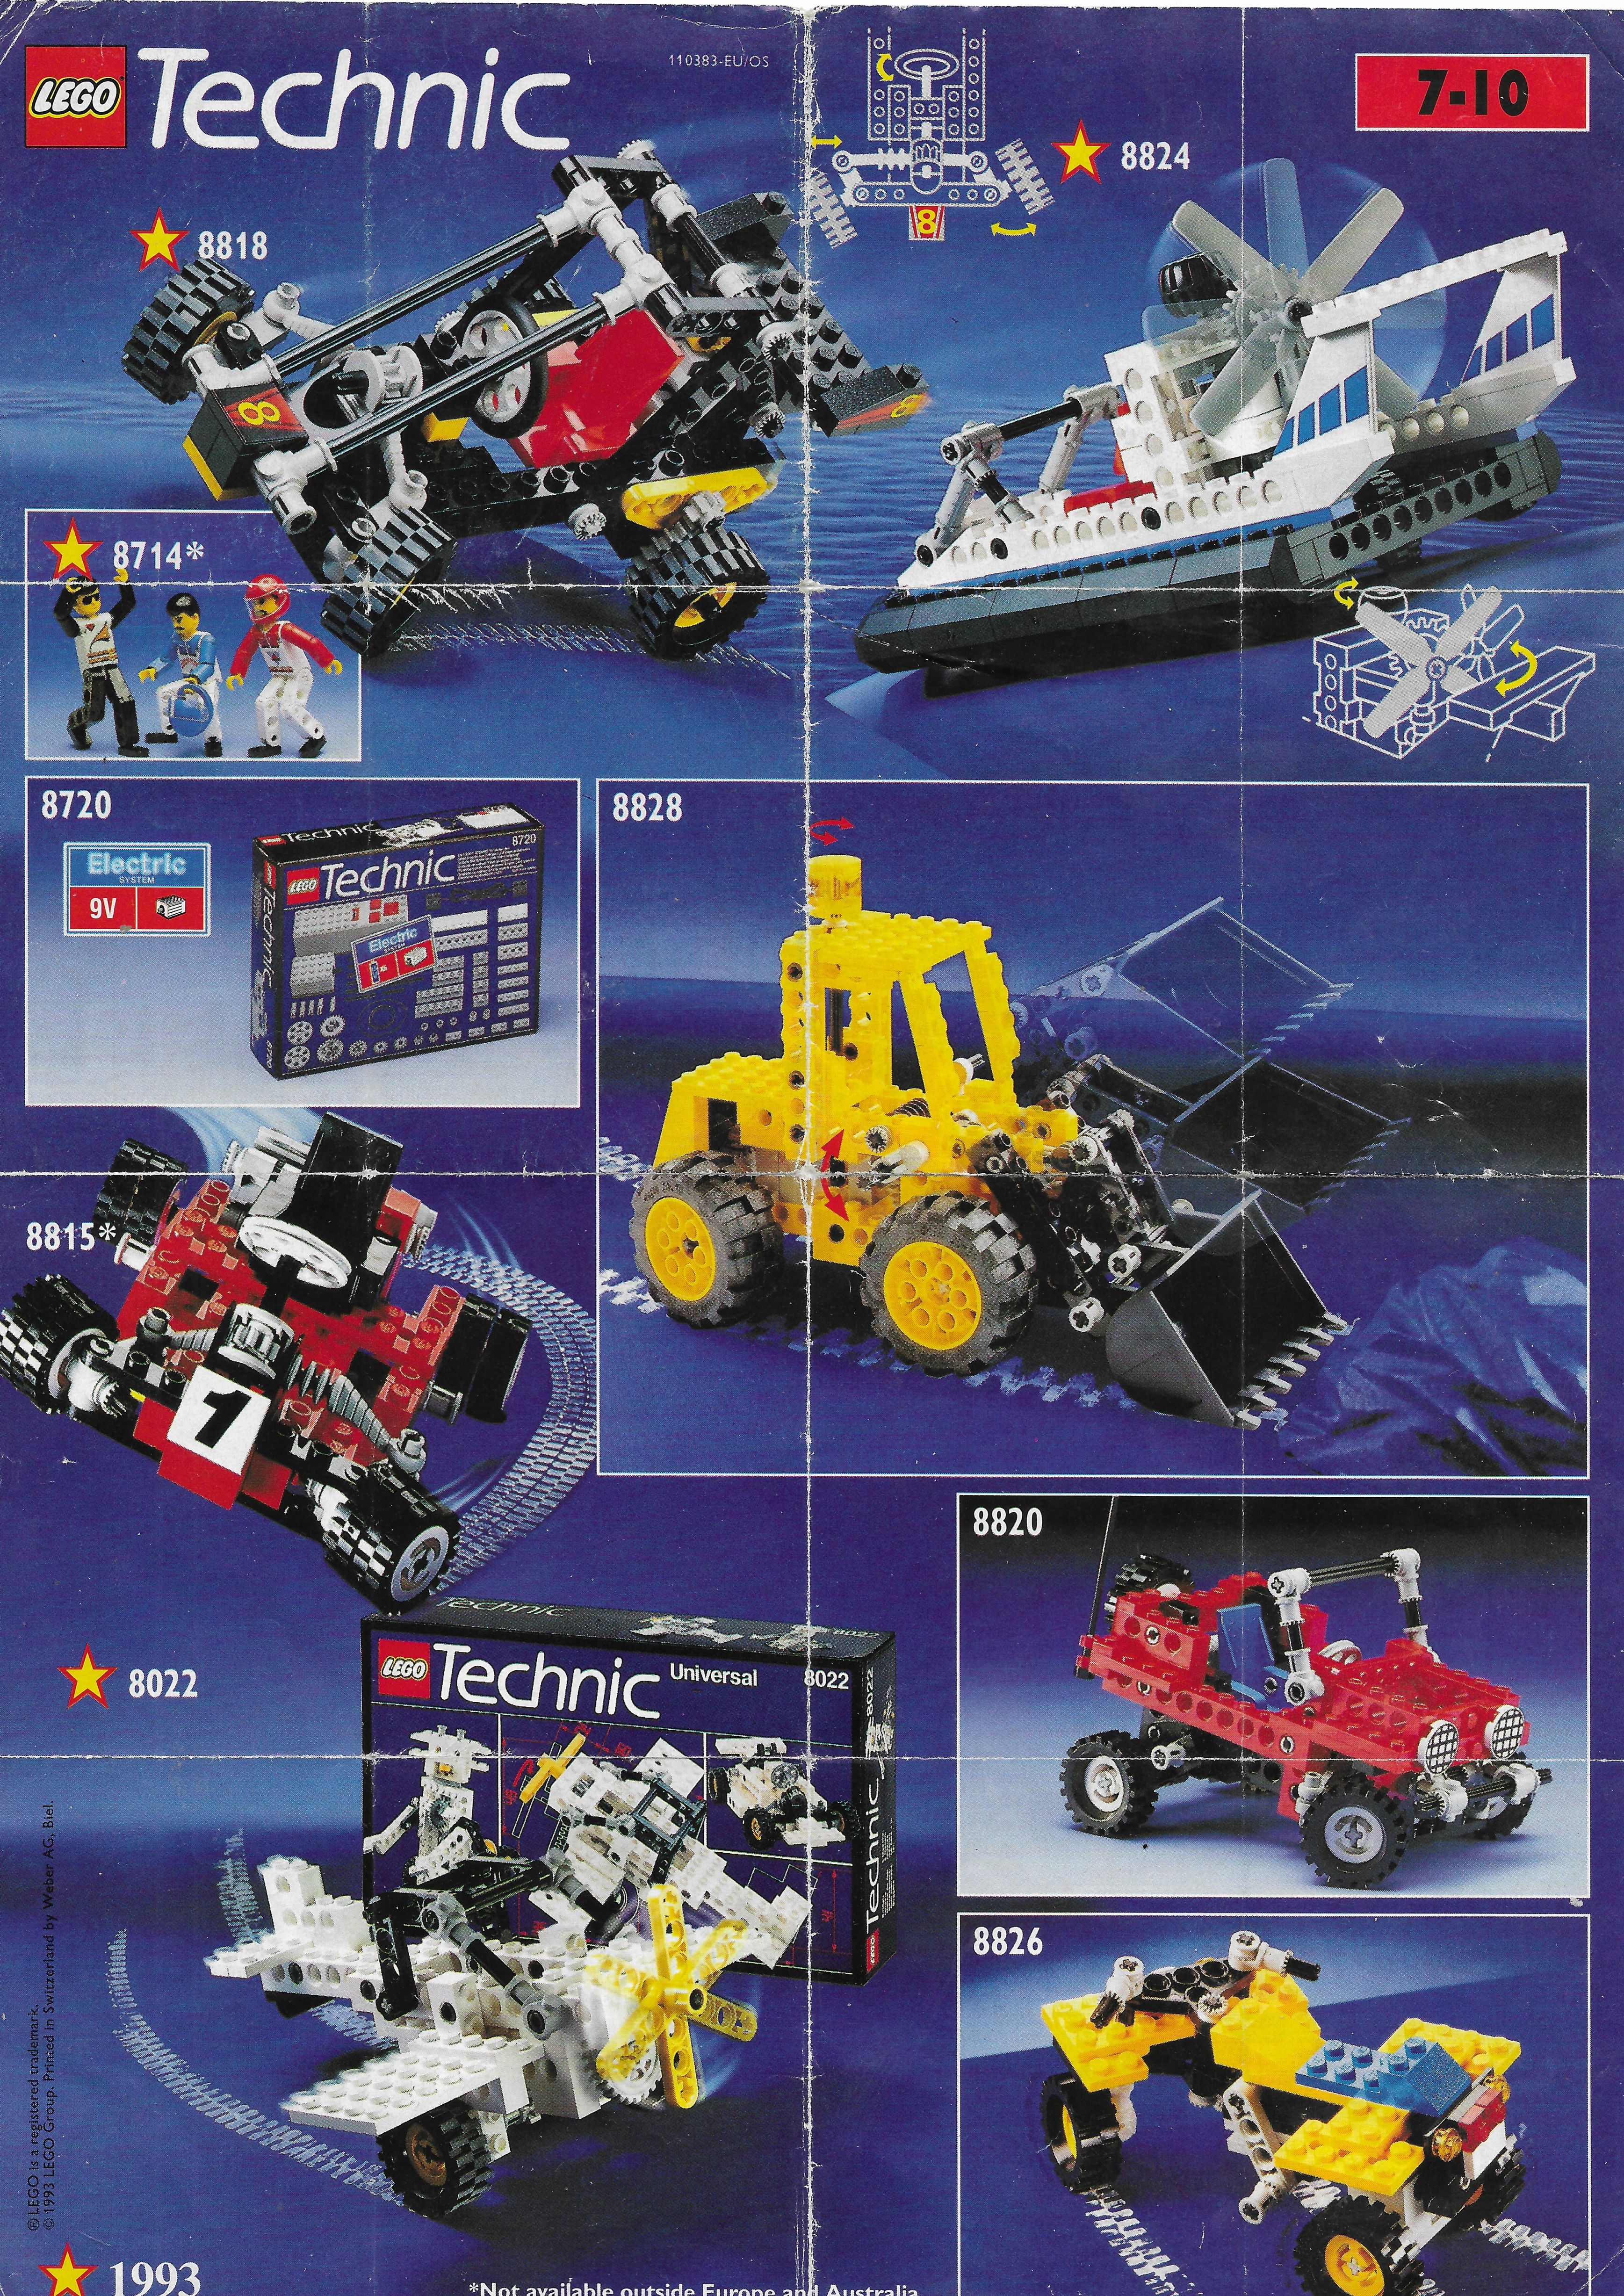 1993-as Lego Technic insert